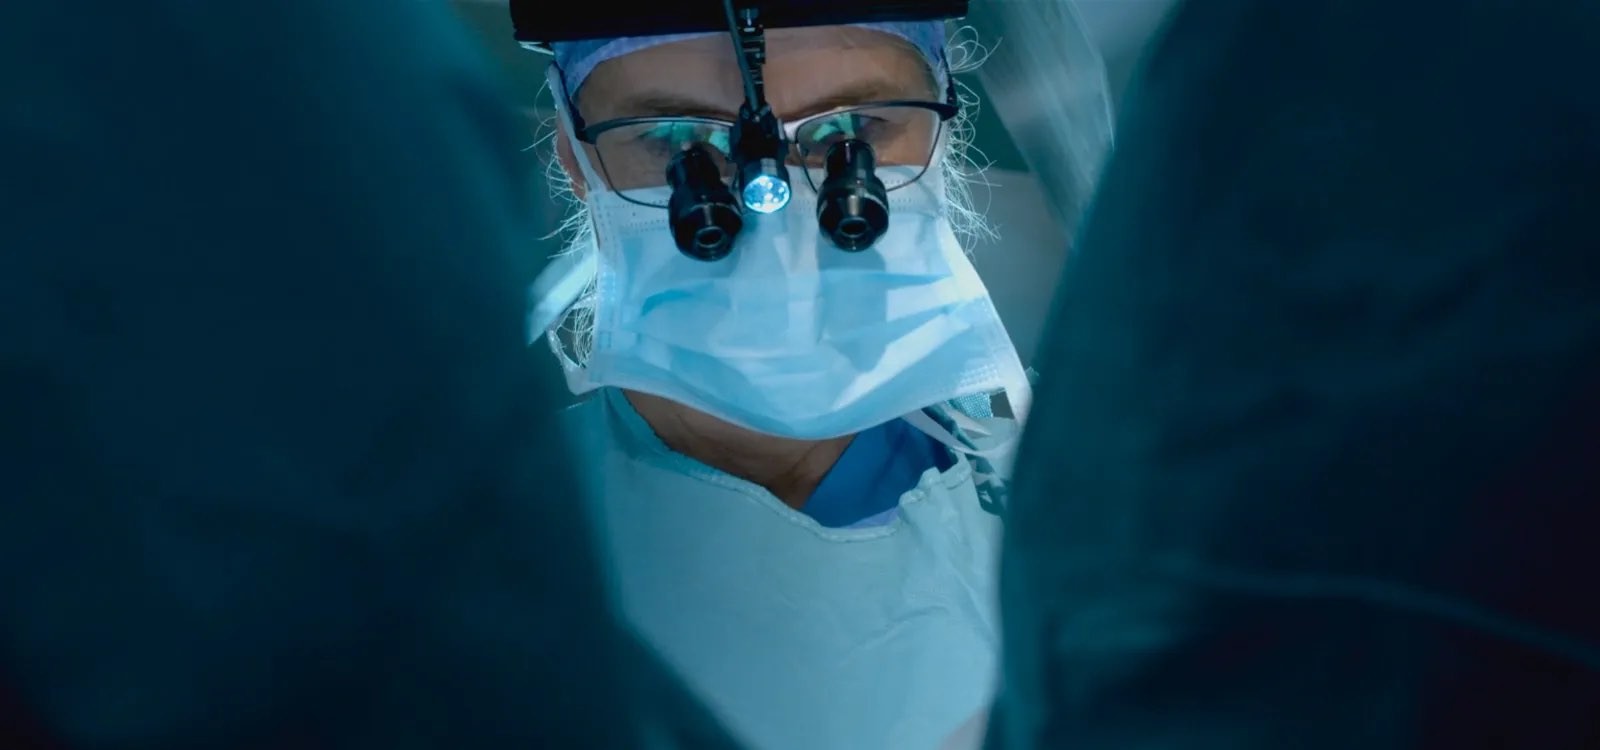 Heart surgeon during surgery.jpg